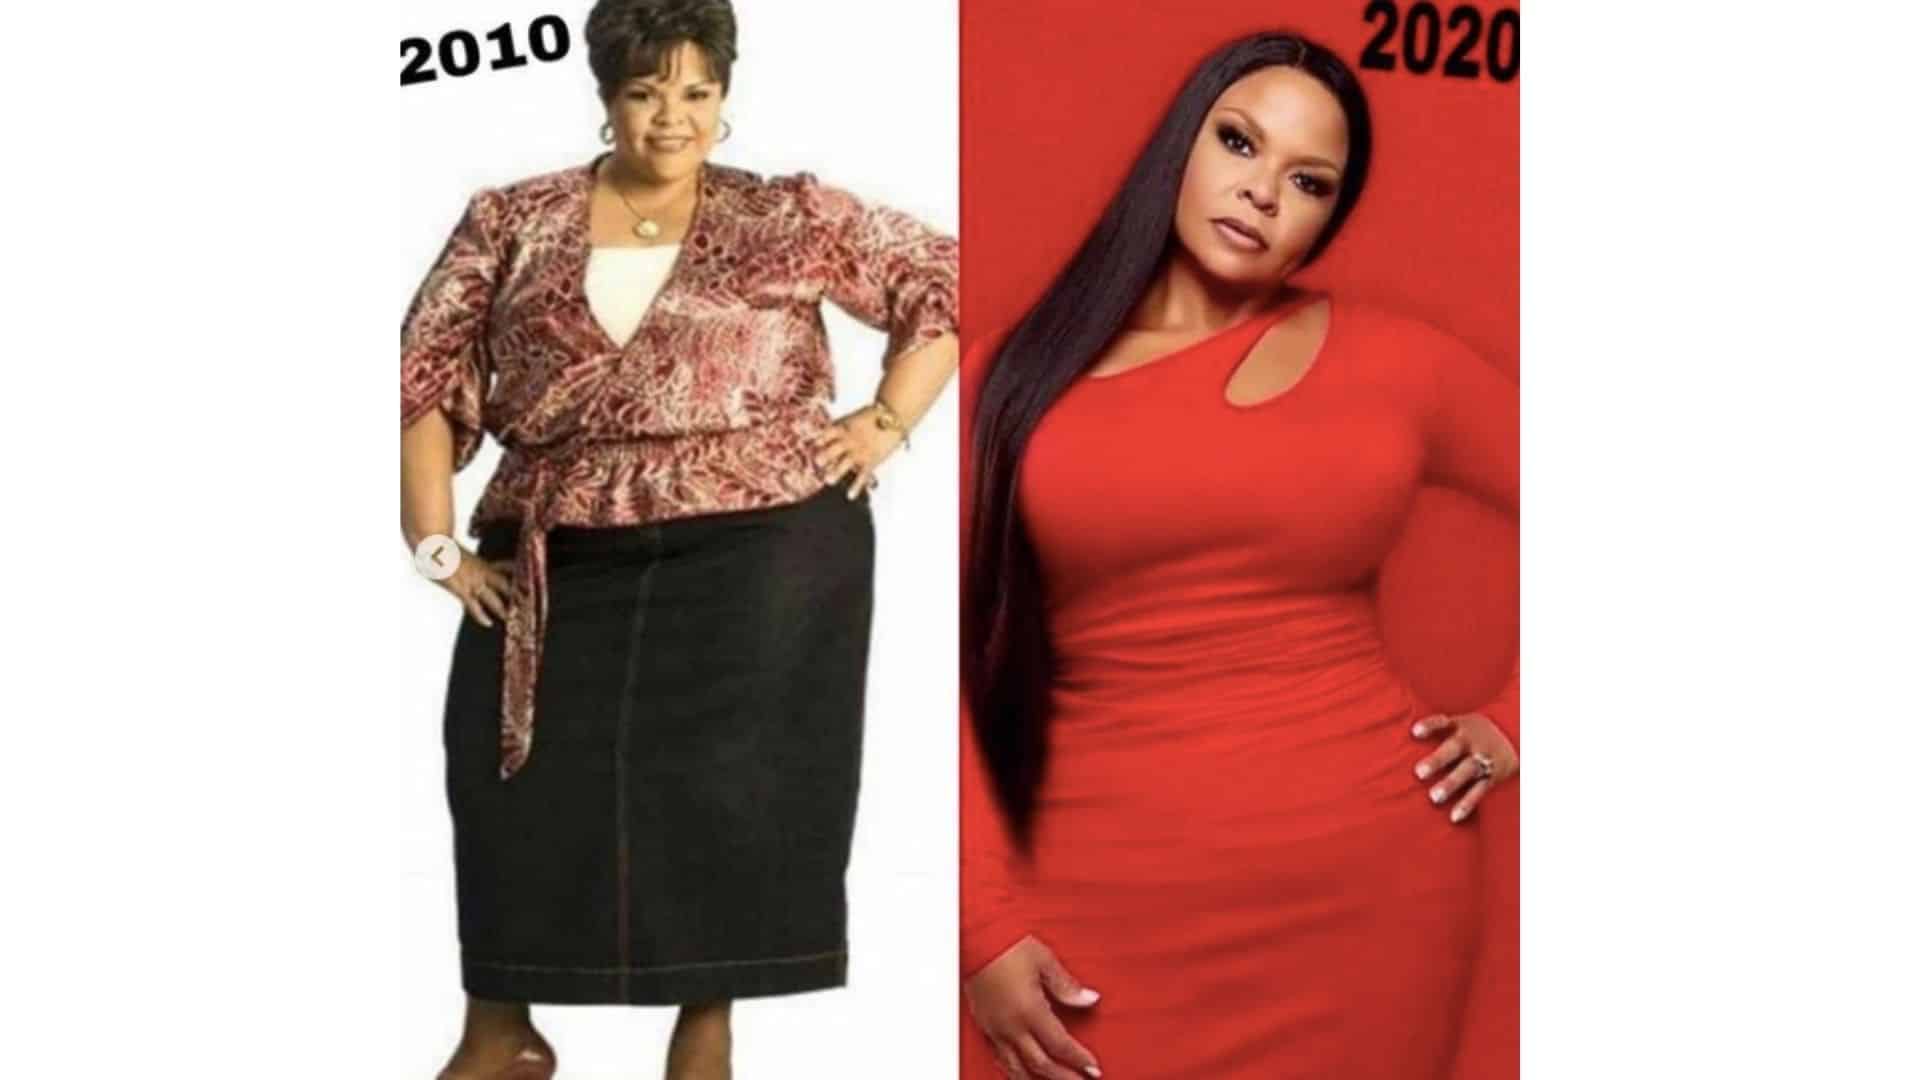 The Evolution of Tamela Mann's Weight Loss